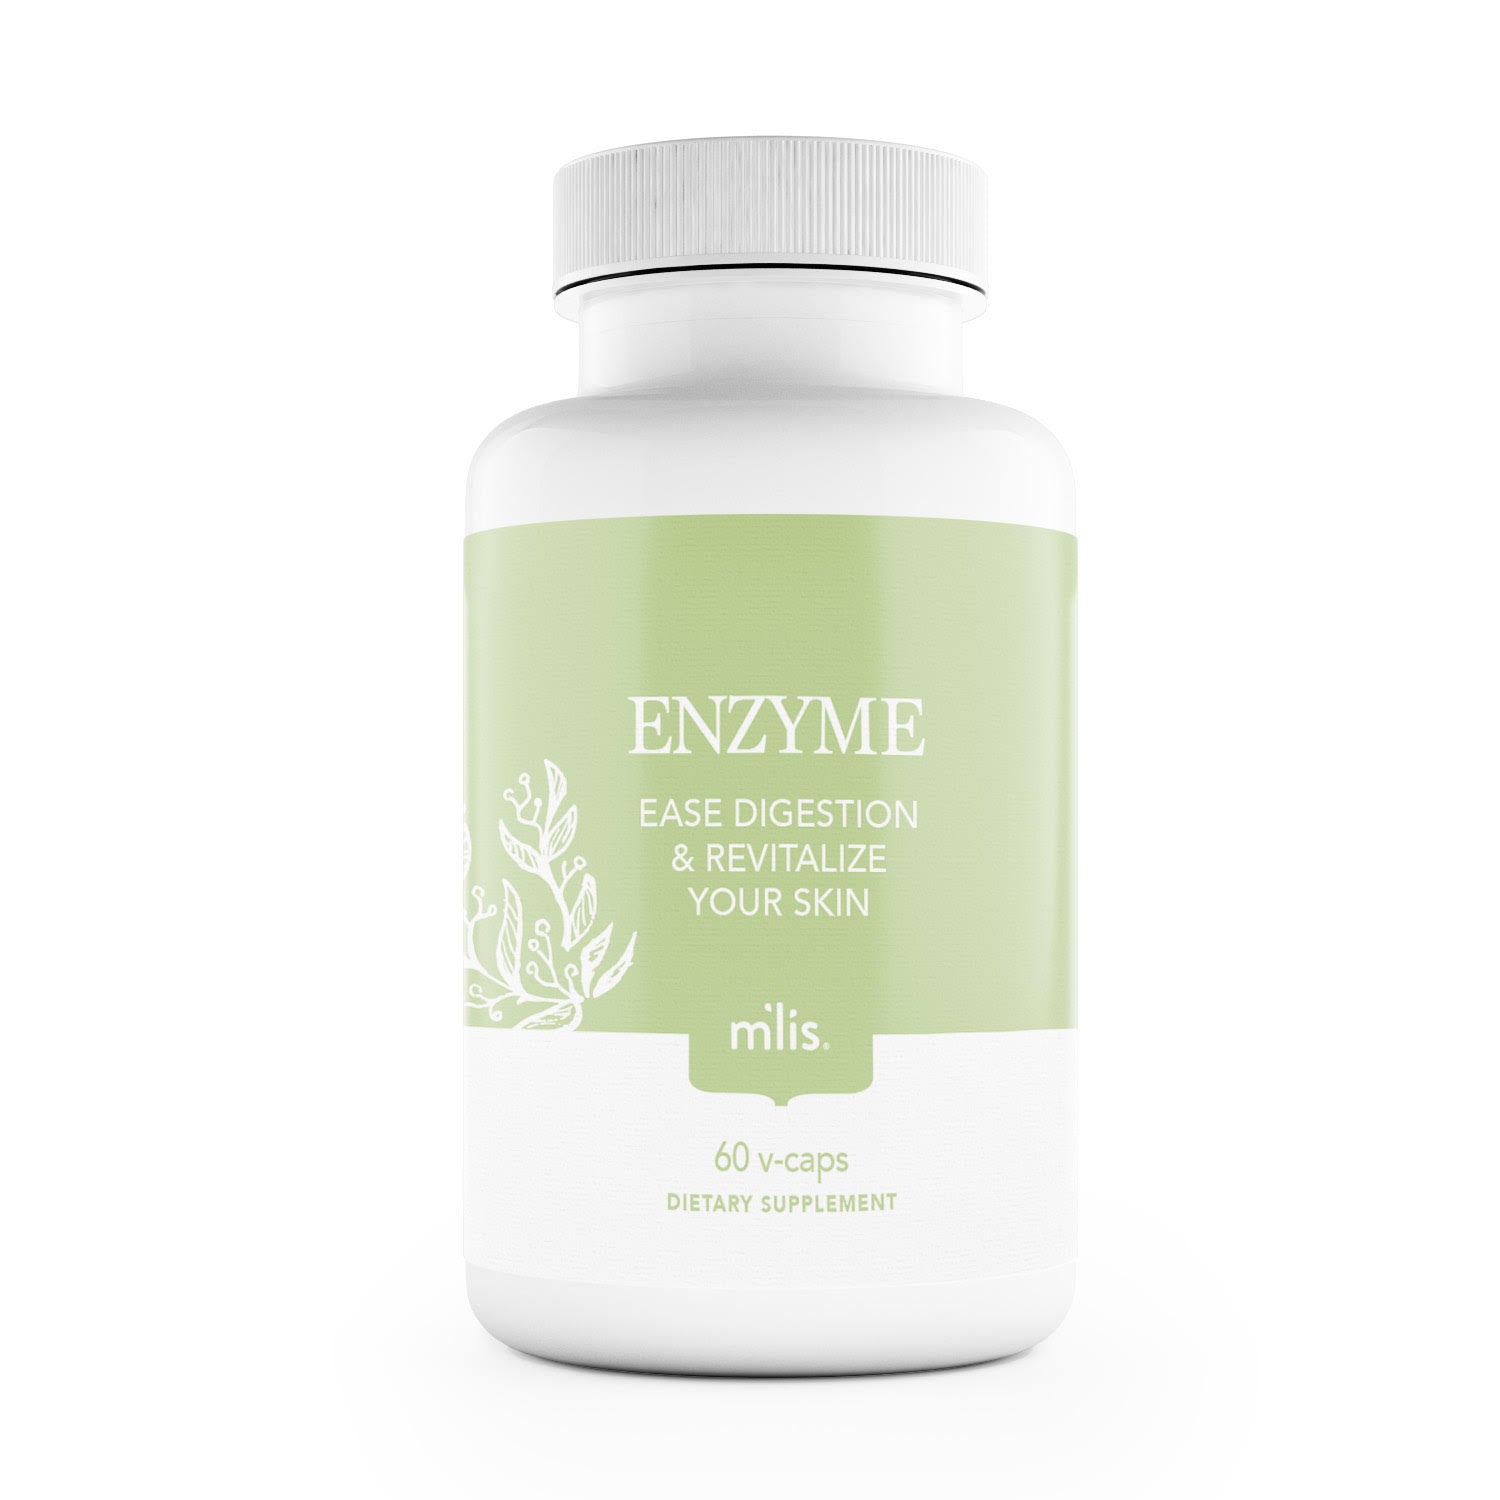 ENZYME Digestive Enzyme Blend